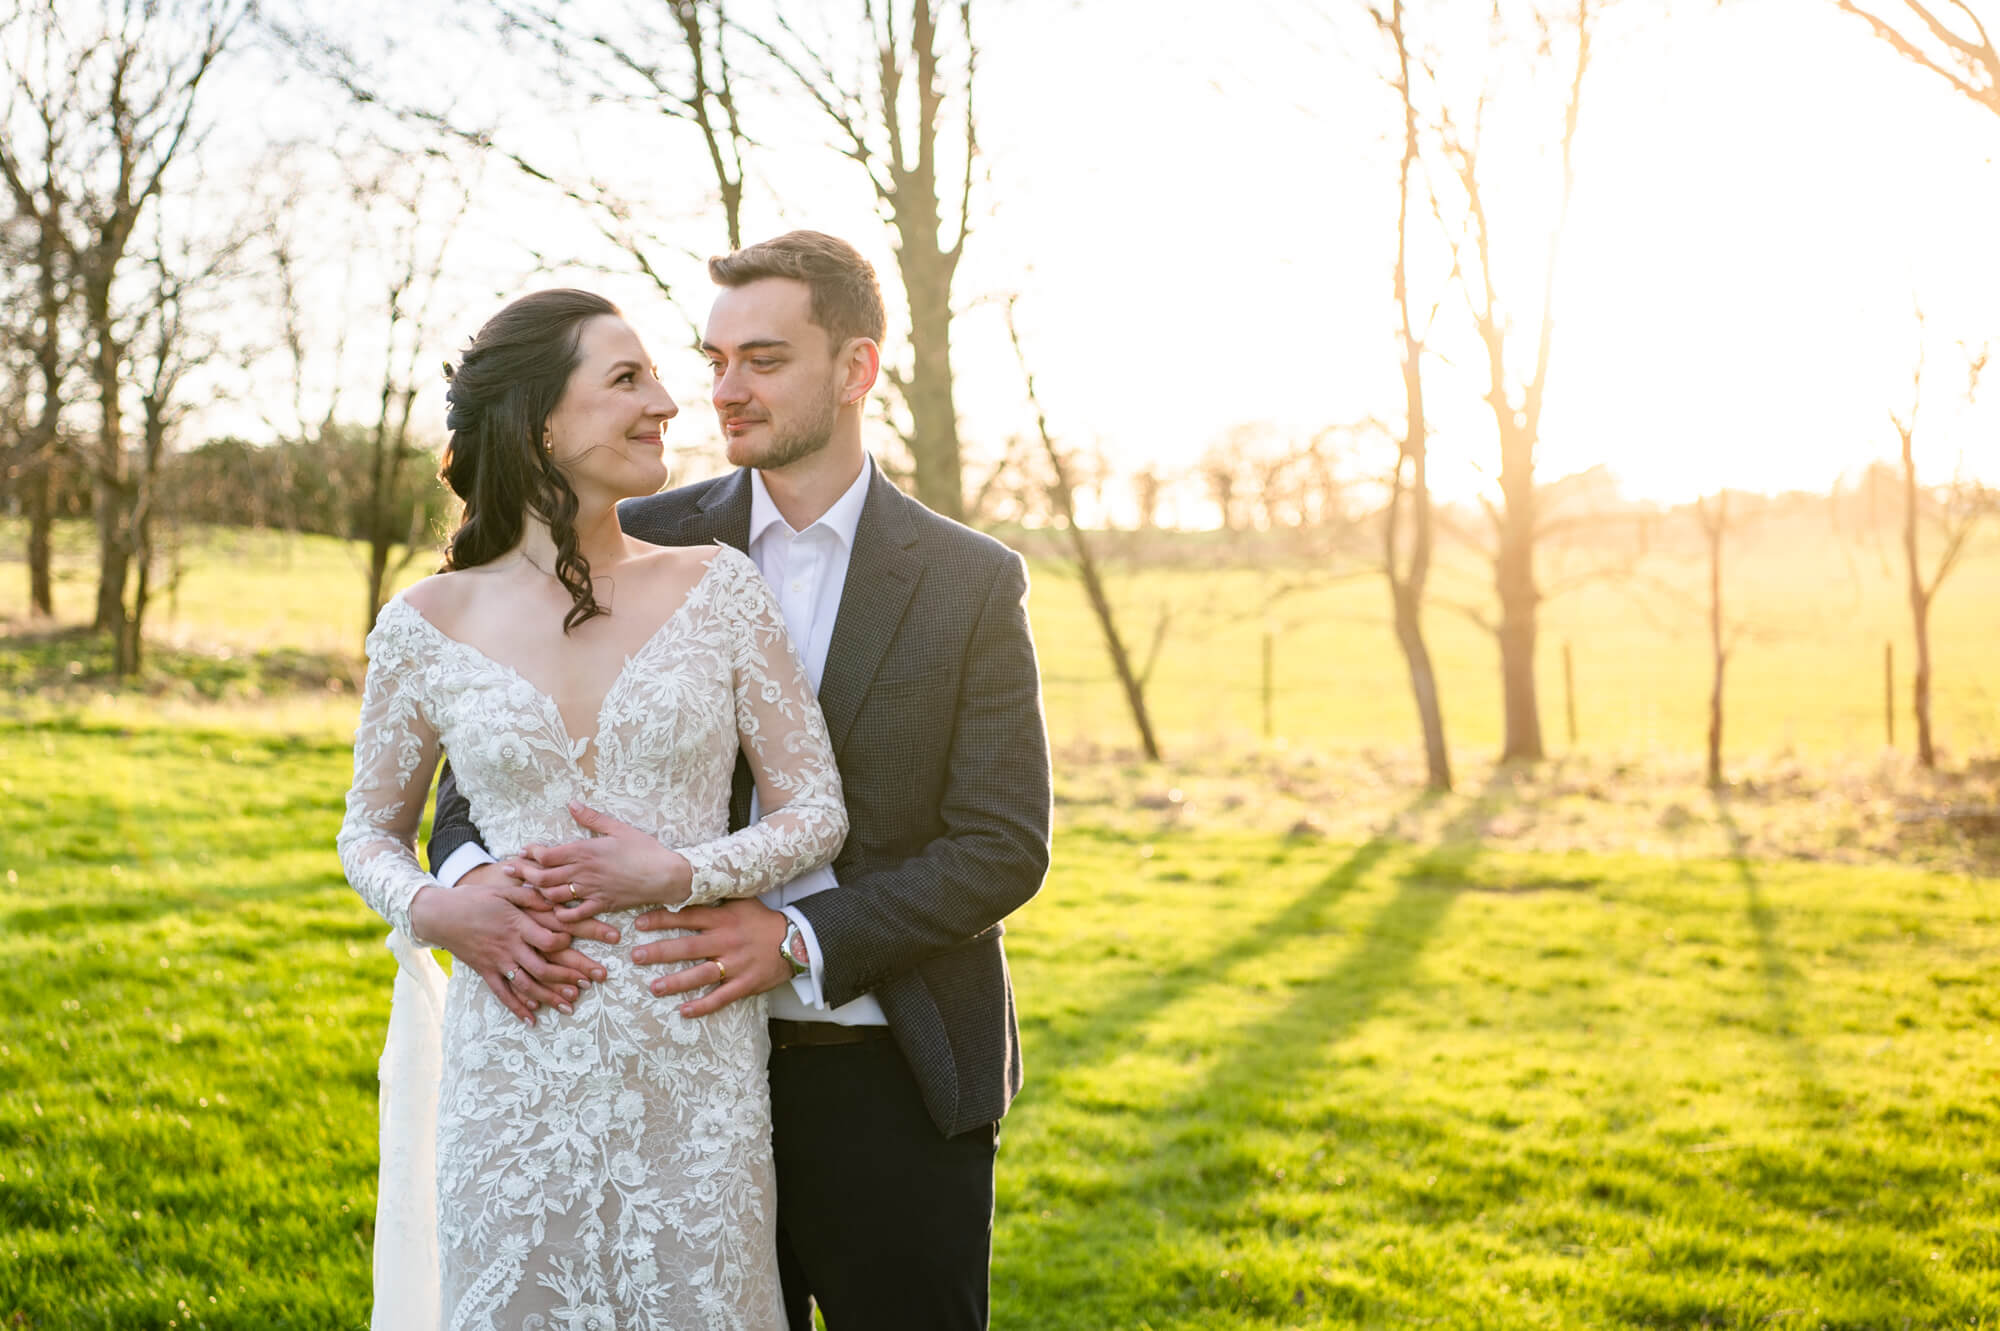 Milton Keynes Wedding Photographer Chloe Bolam - Furtho Manor Farm Wedding - Sunset Golden Hour Couple Portrait